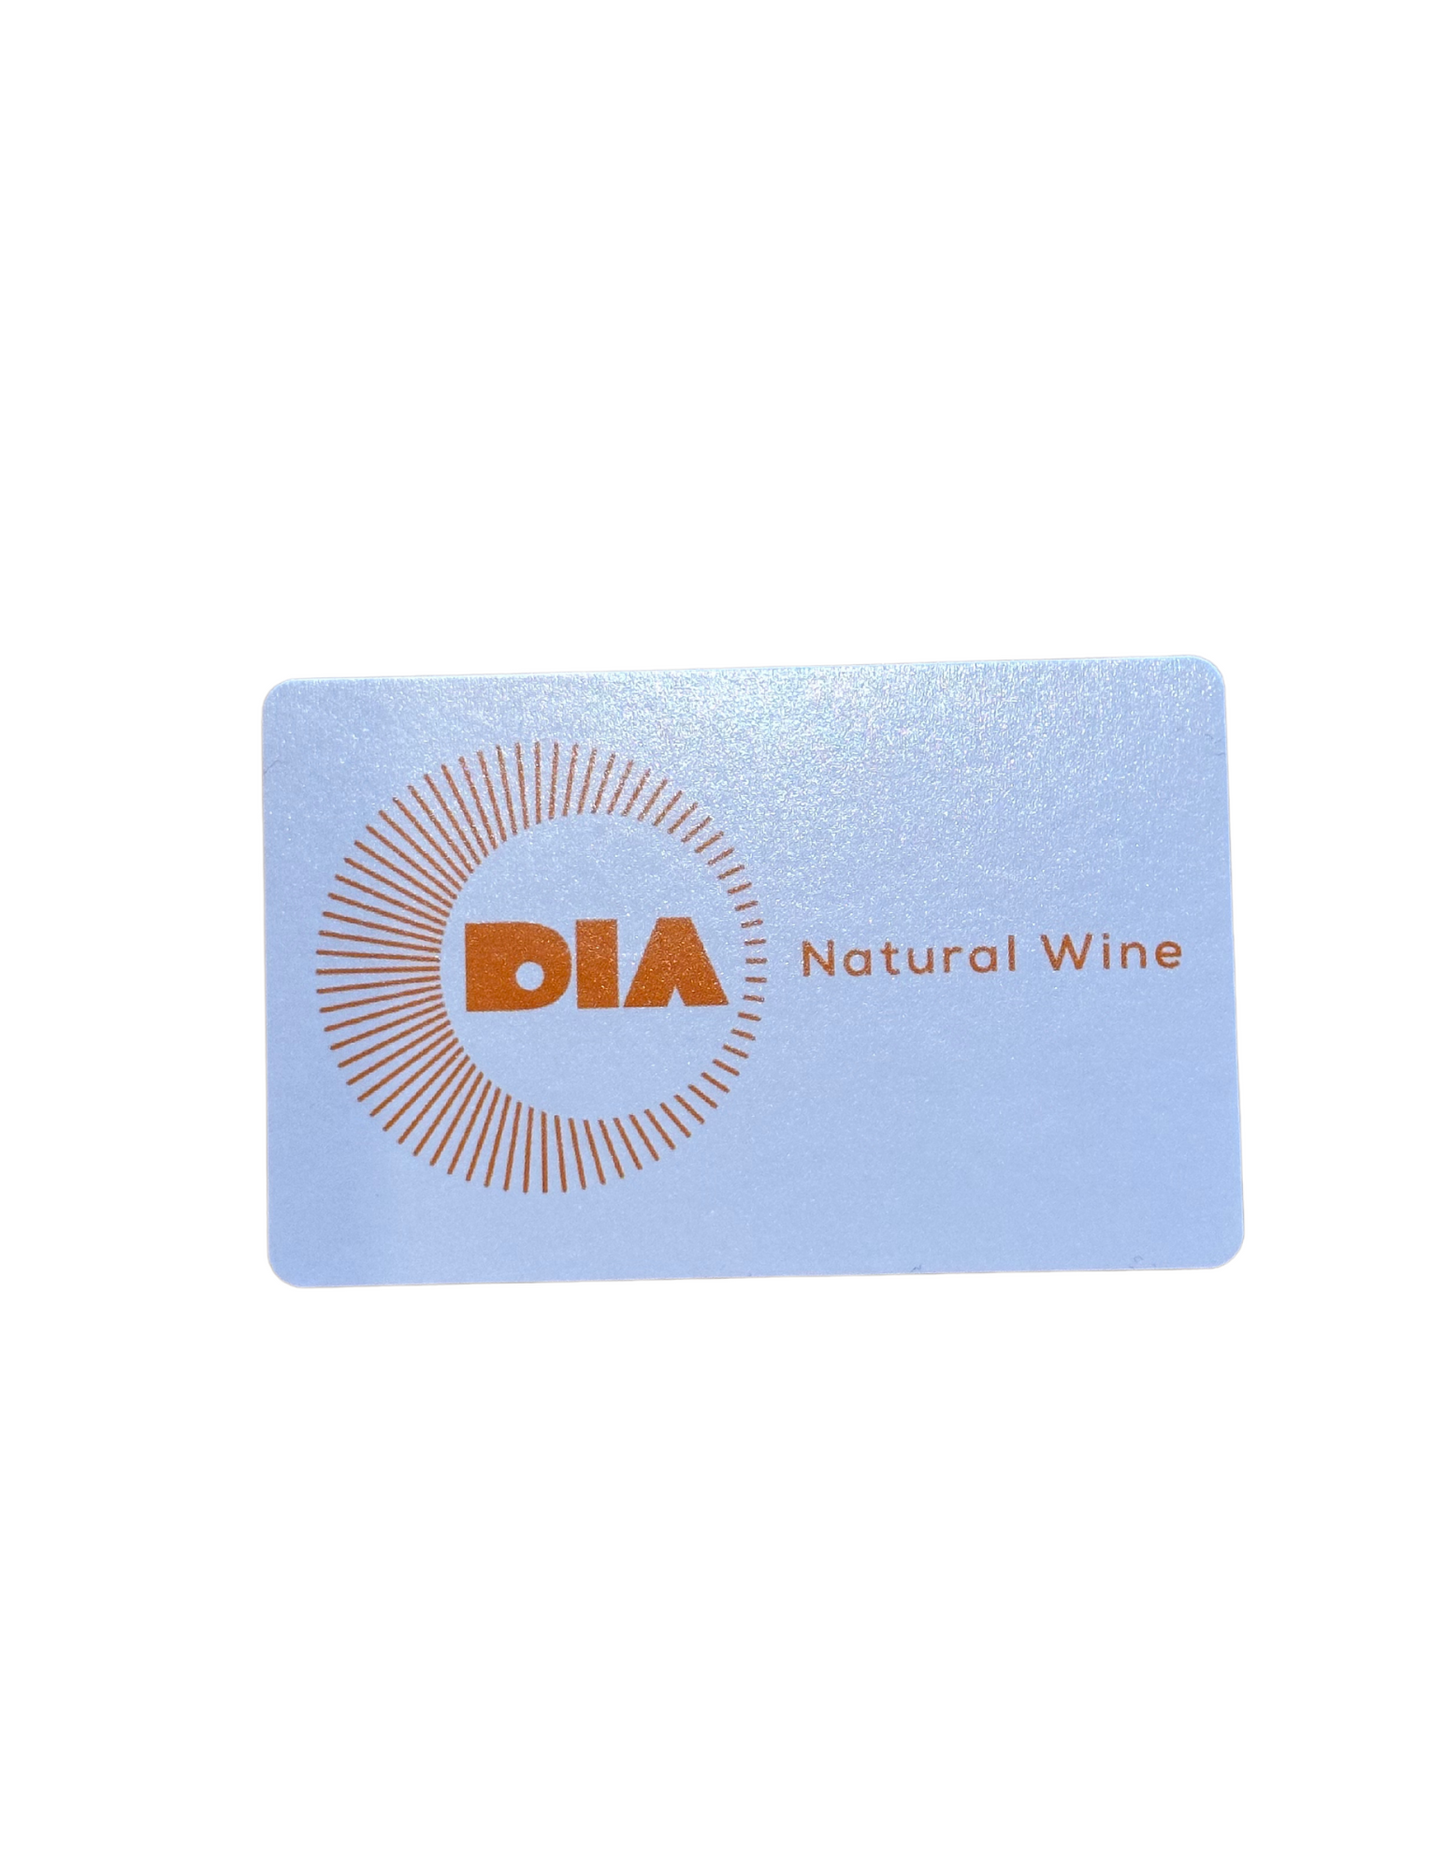 DIA Natural Wine Gift Card